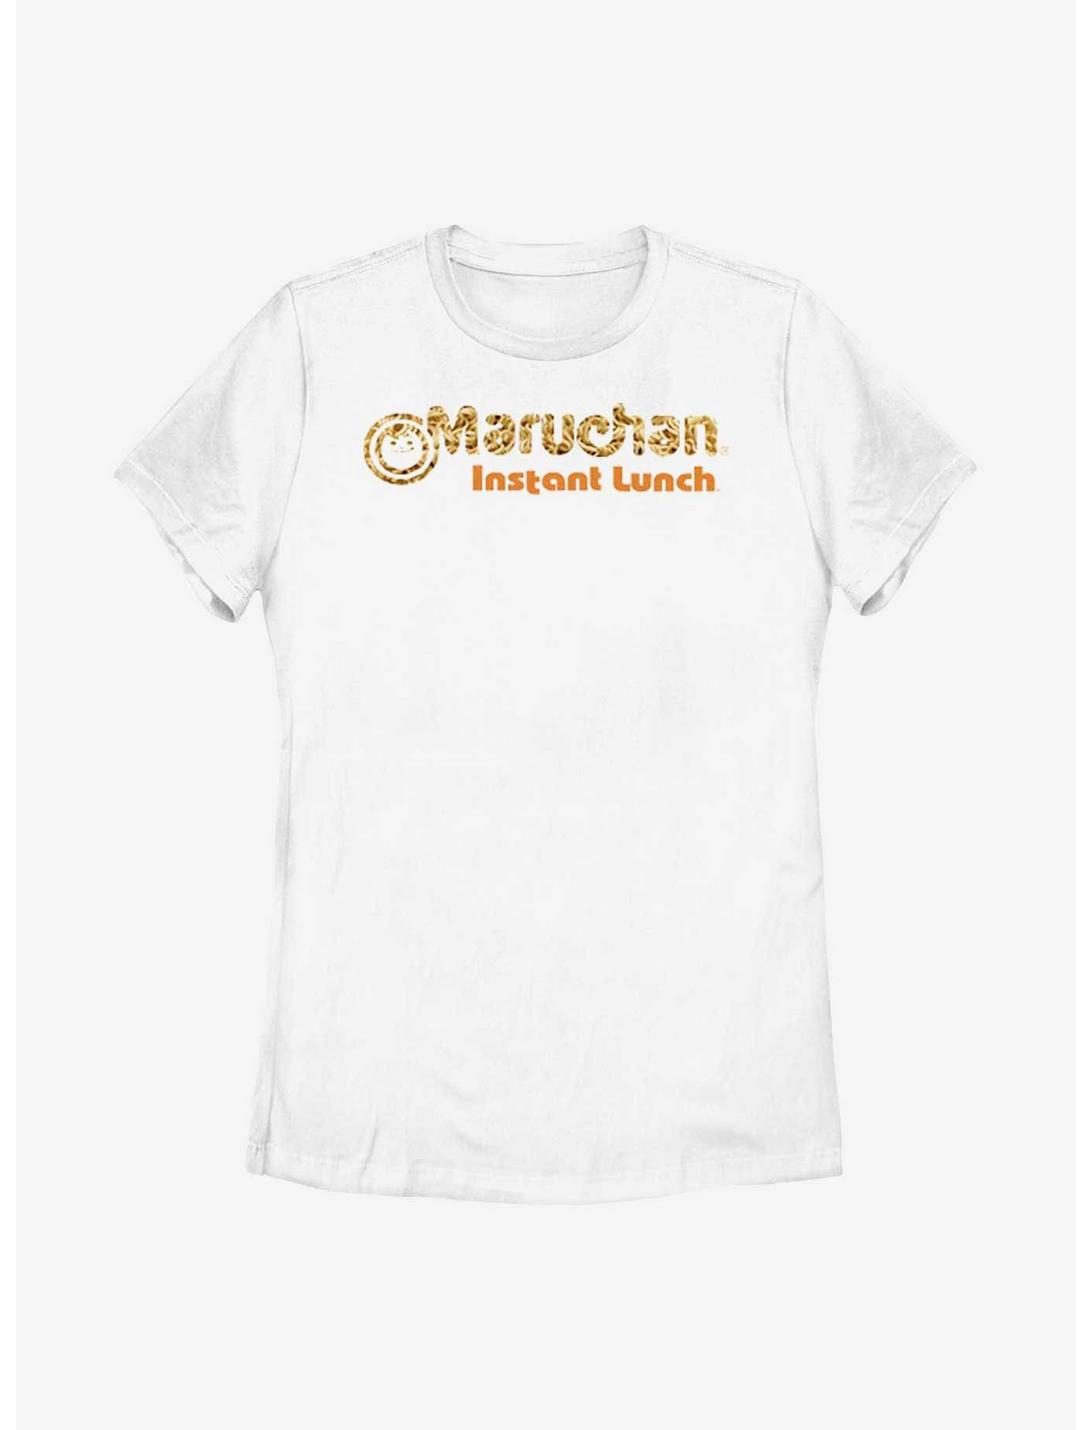 Maruchan Noodles Womens T-Shirt, WHITE, hi-res